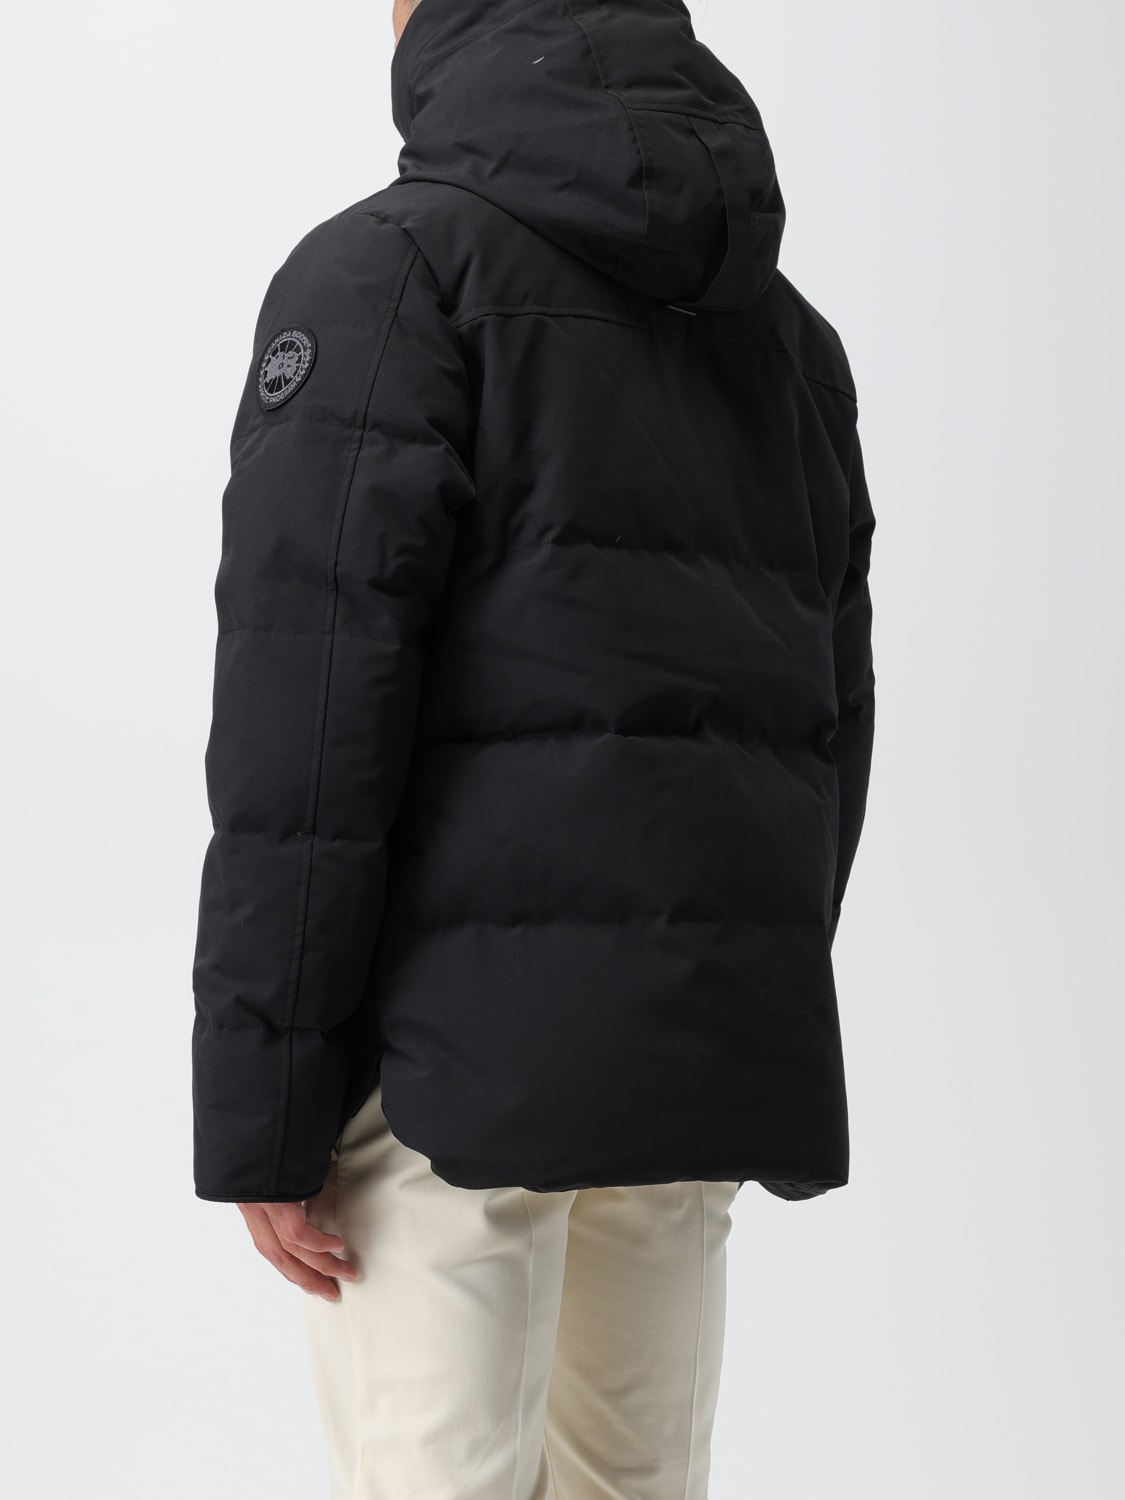 CANADA GOOSE: jacket for man - Black | Canada Goose jacket 2080MB ...